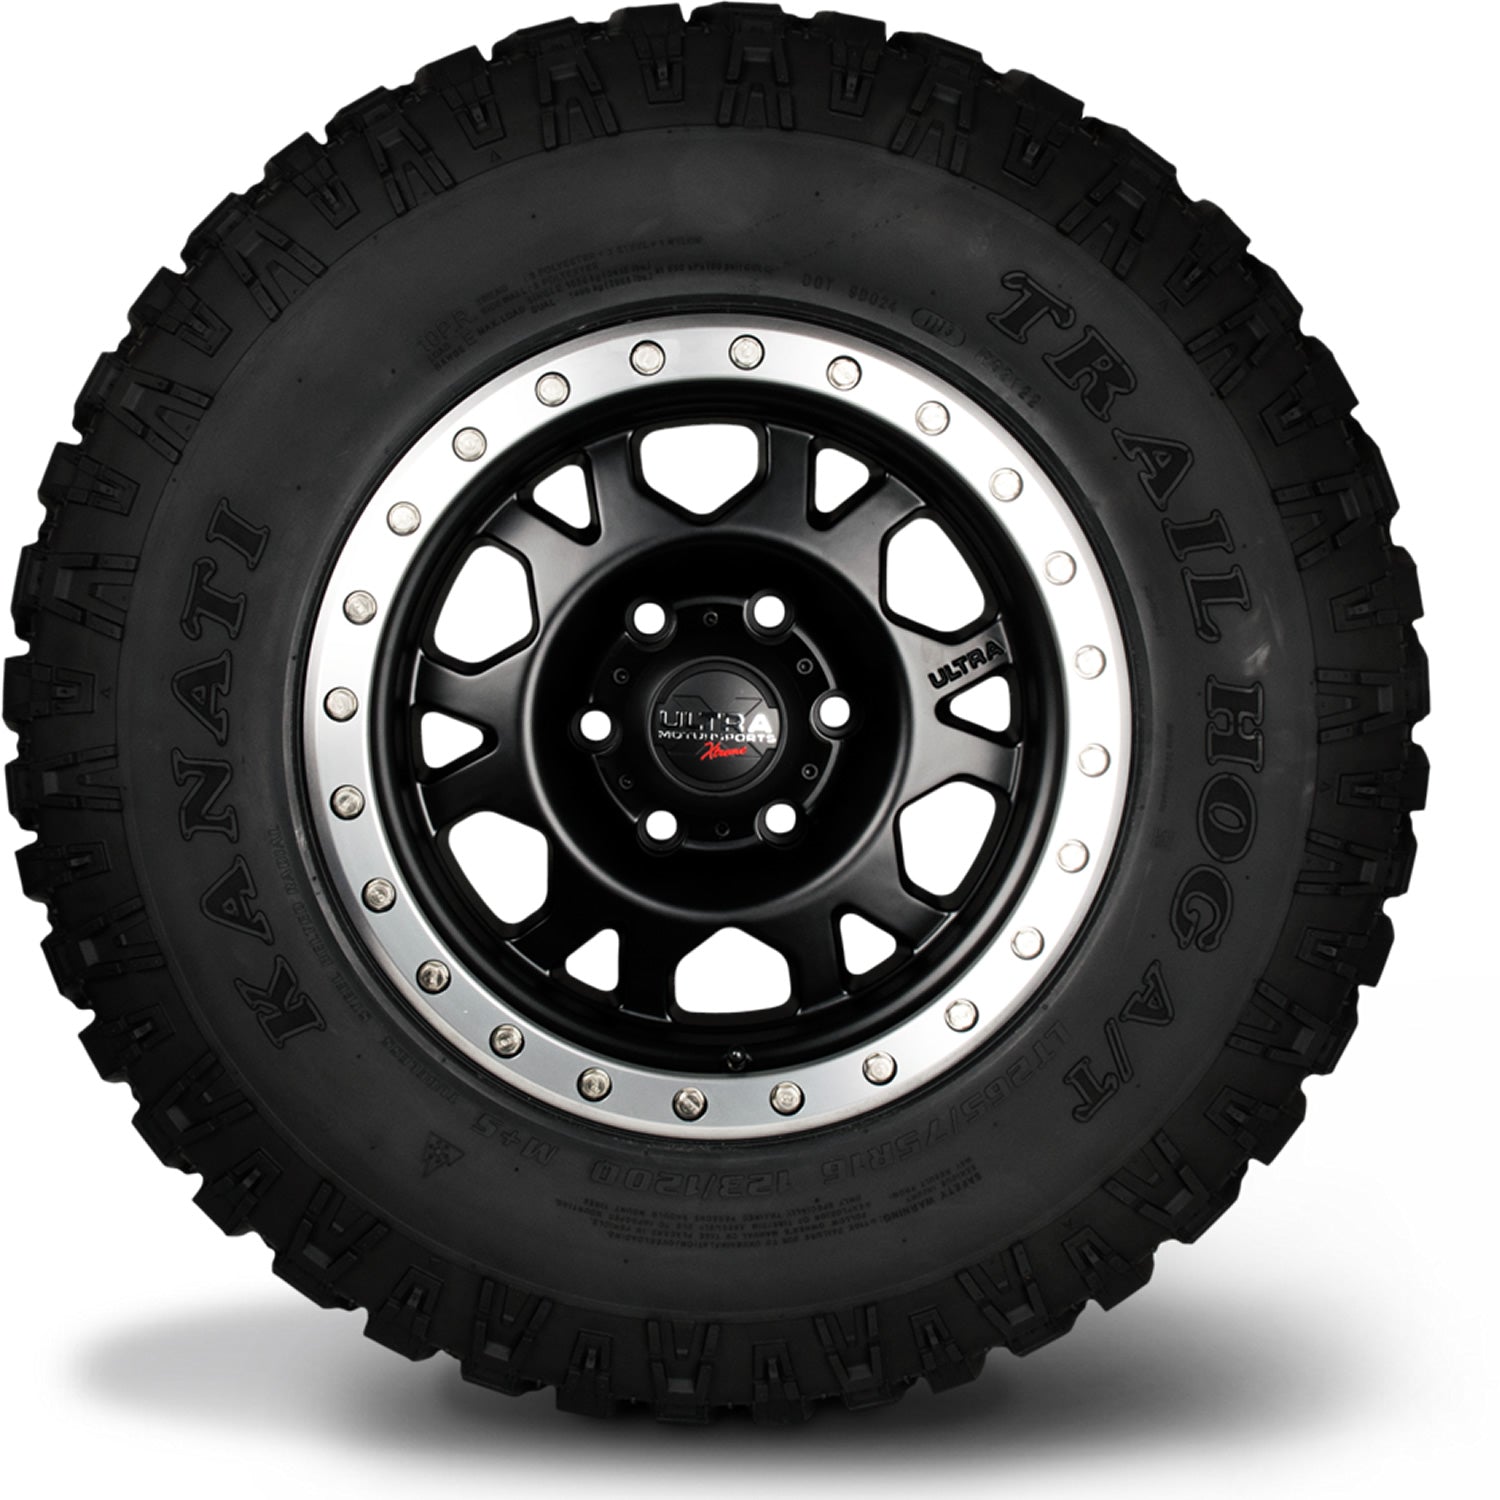 KANATI TRAIL HOG LT265/70R17 (31.7X10.4R 17) Tires